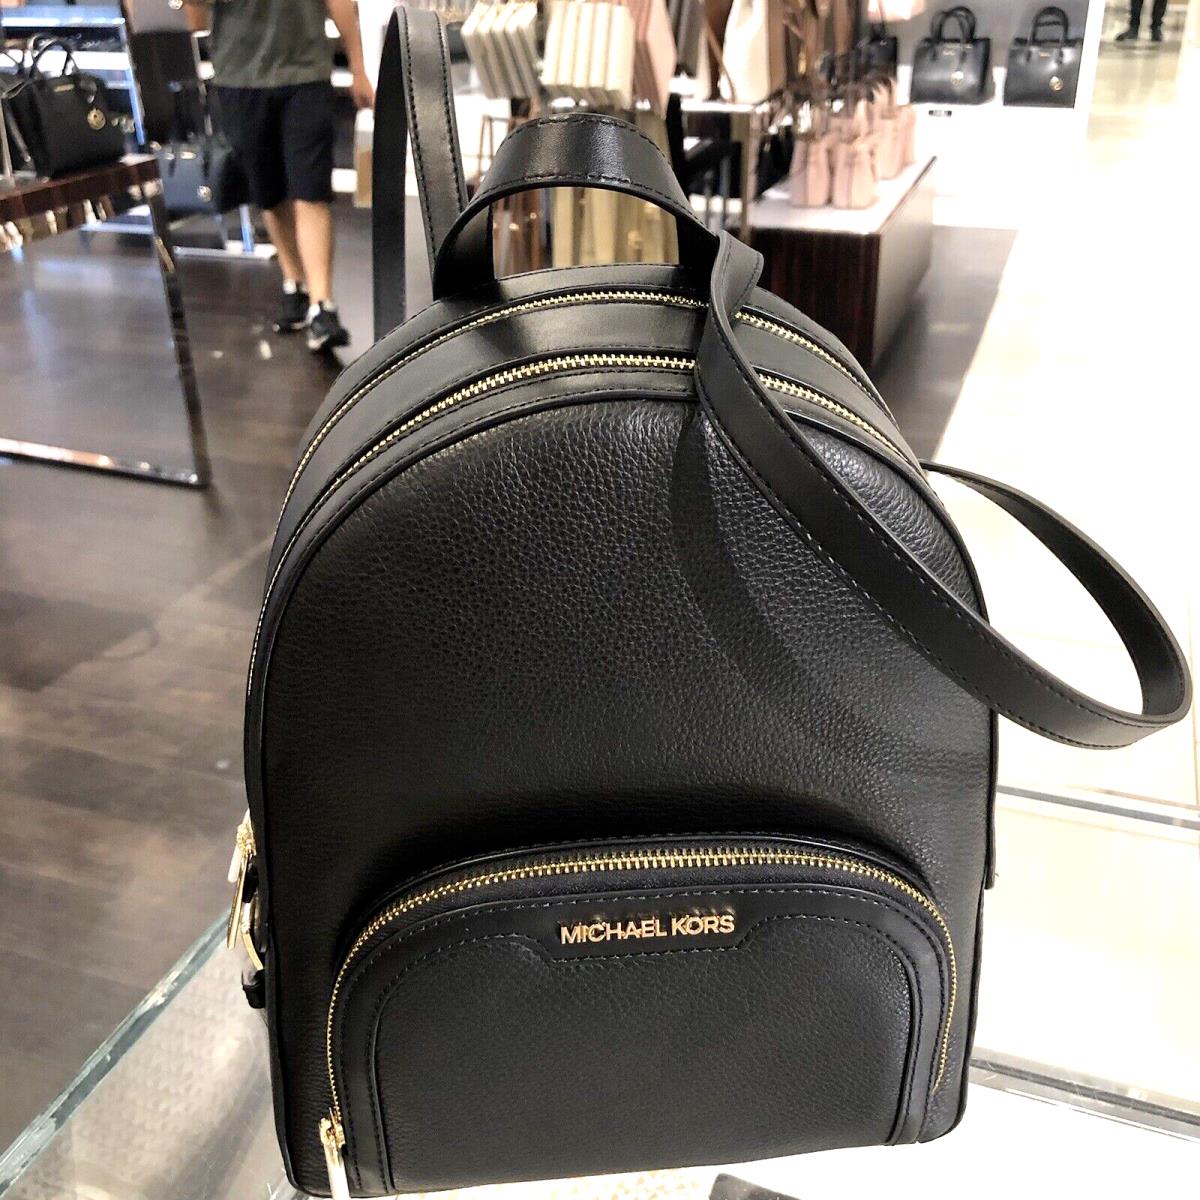 Michael Kors Women Girls Medium School Travel Shoulder Backpack Bag Satchel -var BLACK